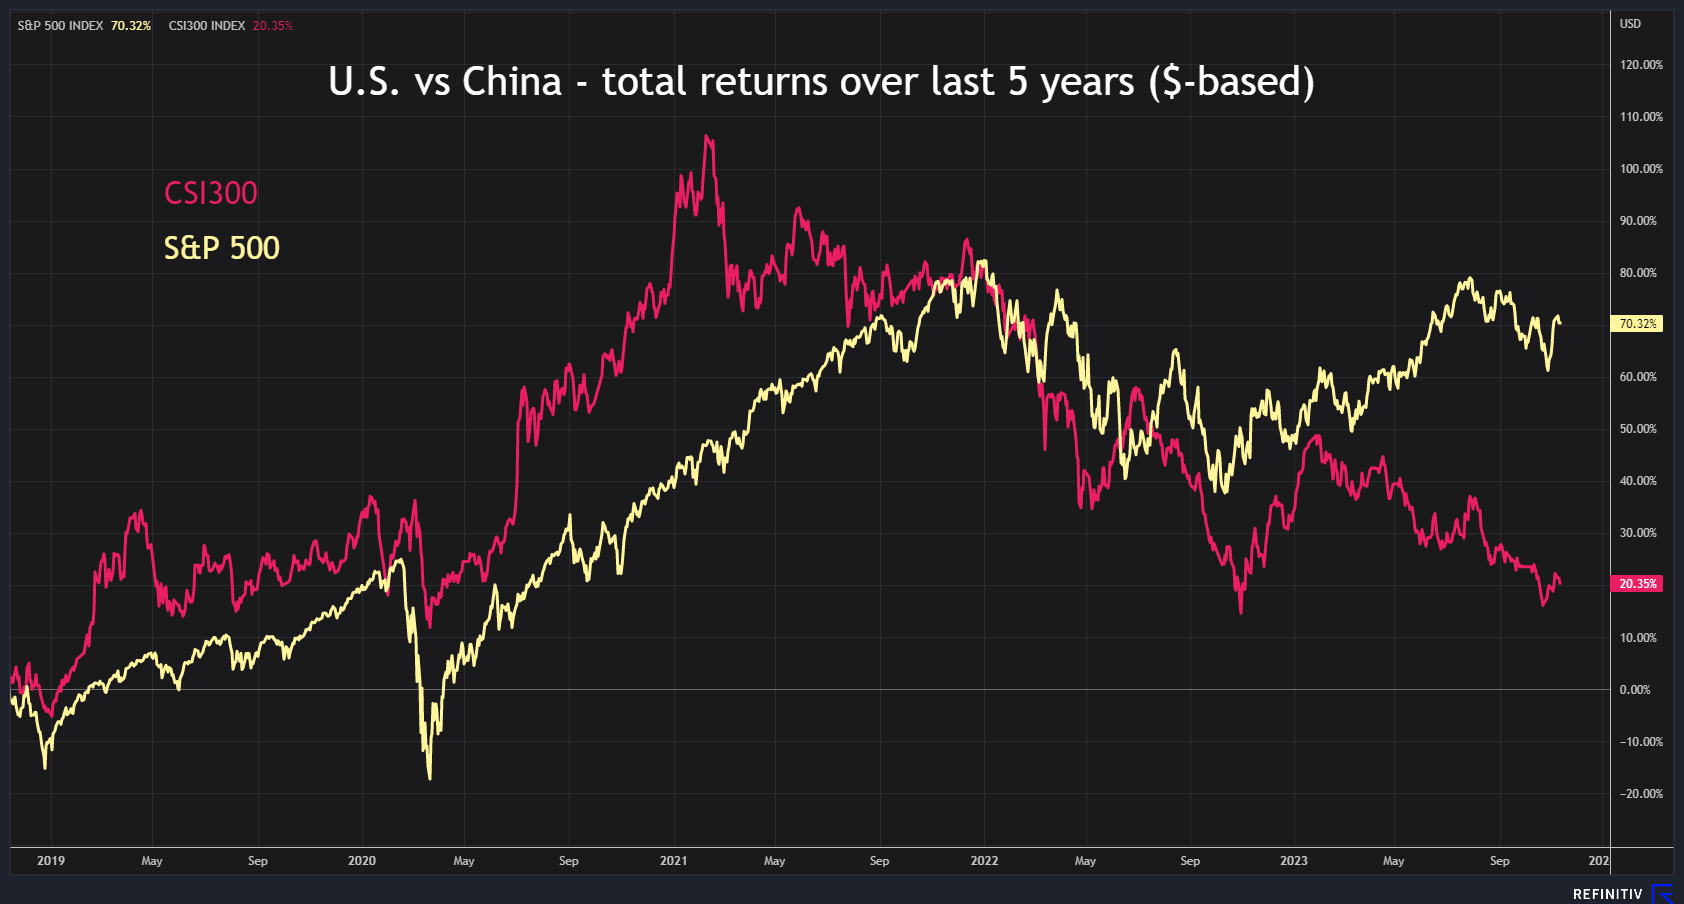 S&P 500 vs CSI300 - total returns over last 5 years